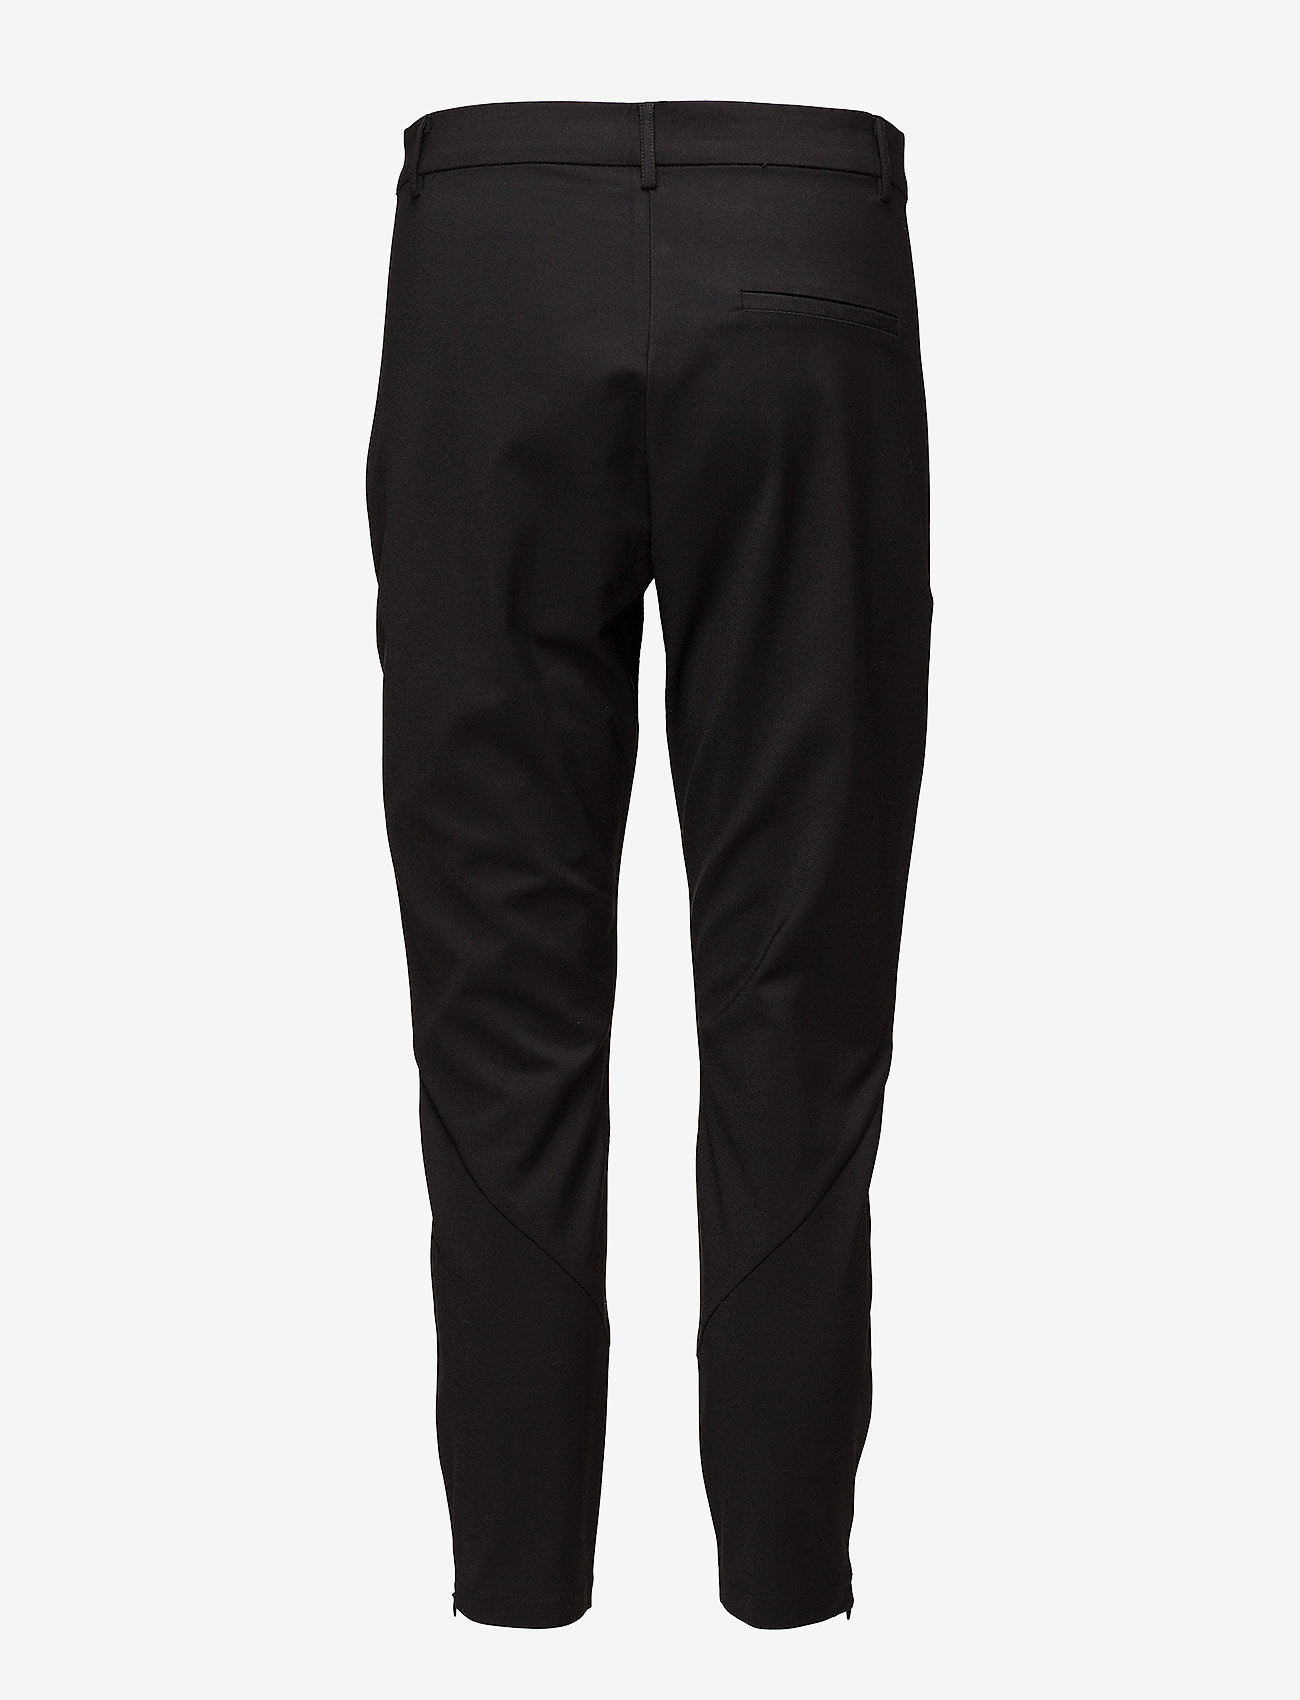 Coster Copenhagen - CC Heart tapered pants - aptemtos kelnės - black - 1